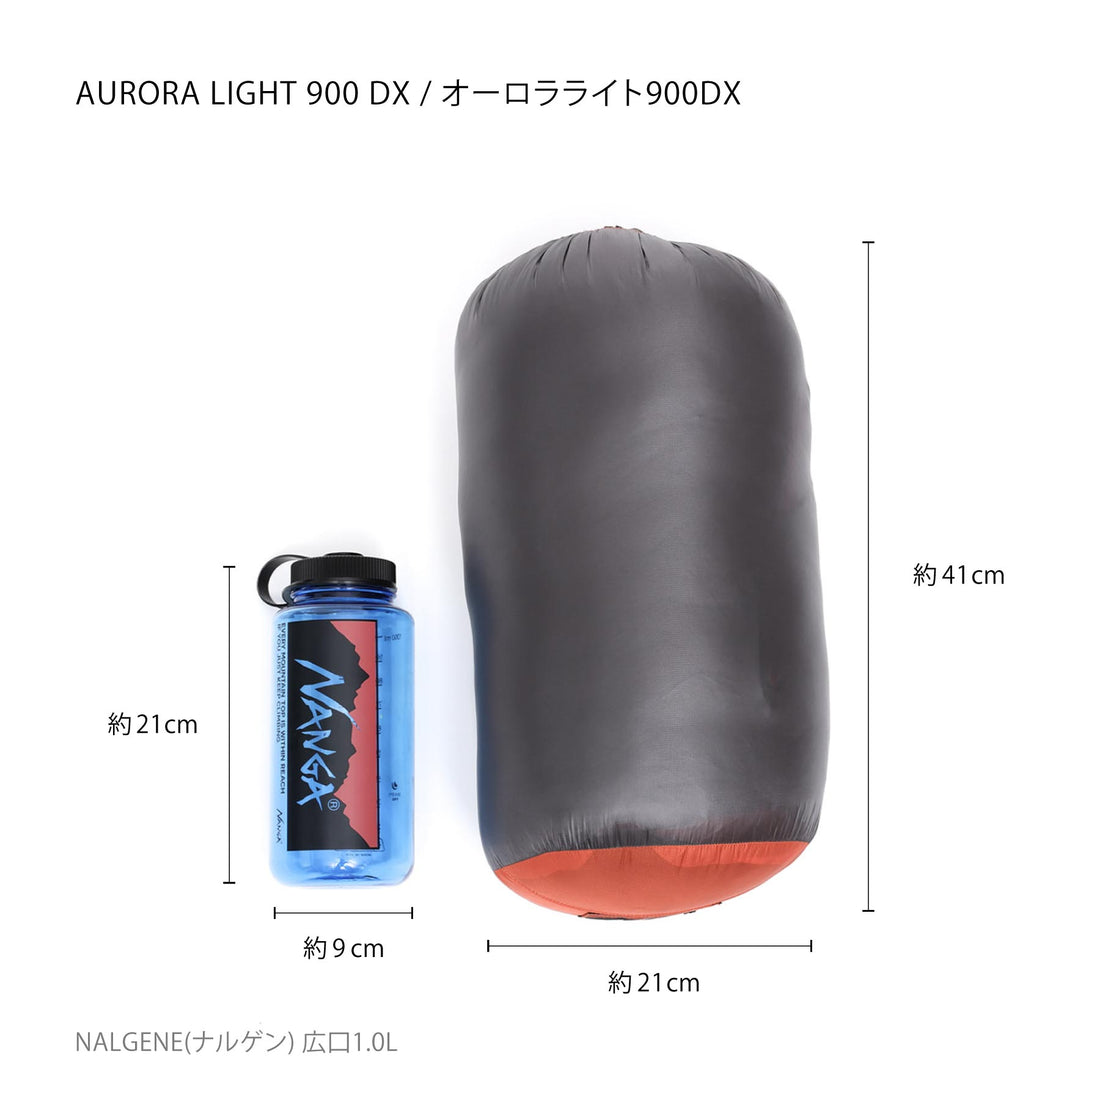 AURORA light 900 DX / オーロラライト900DX